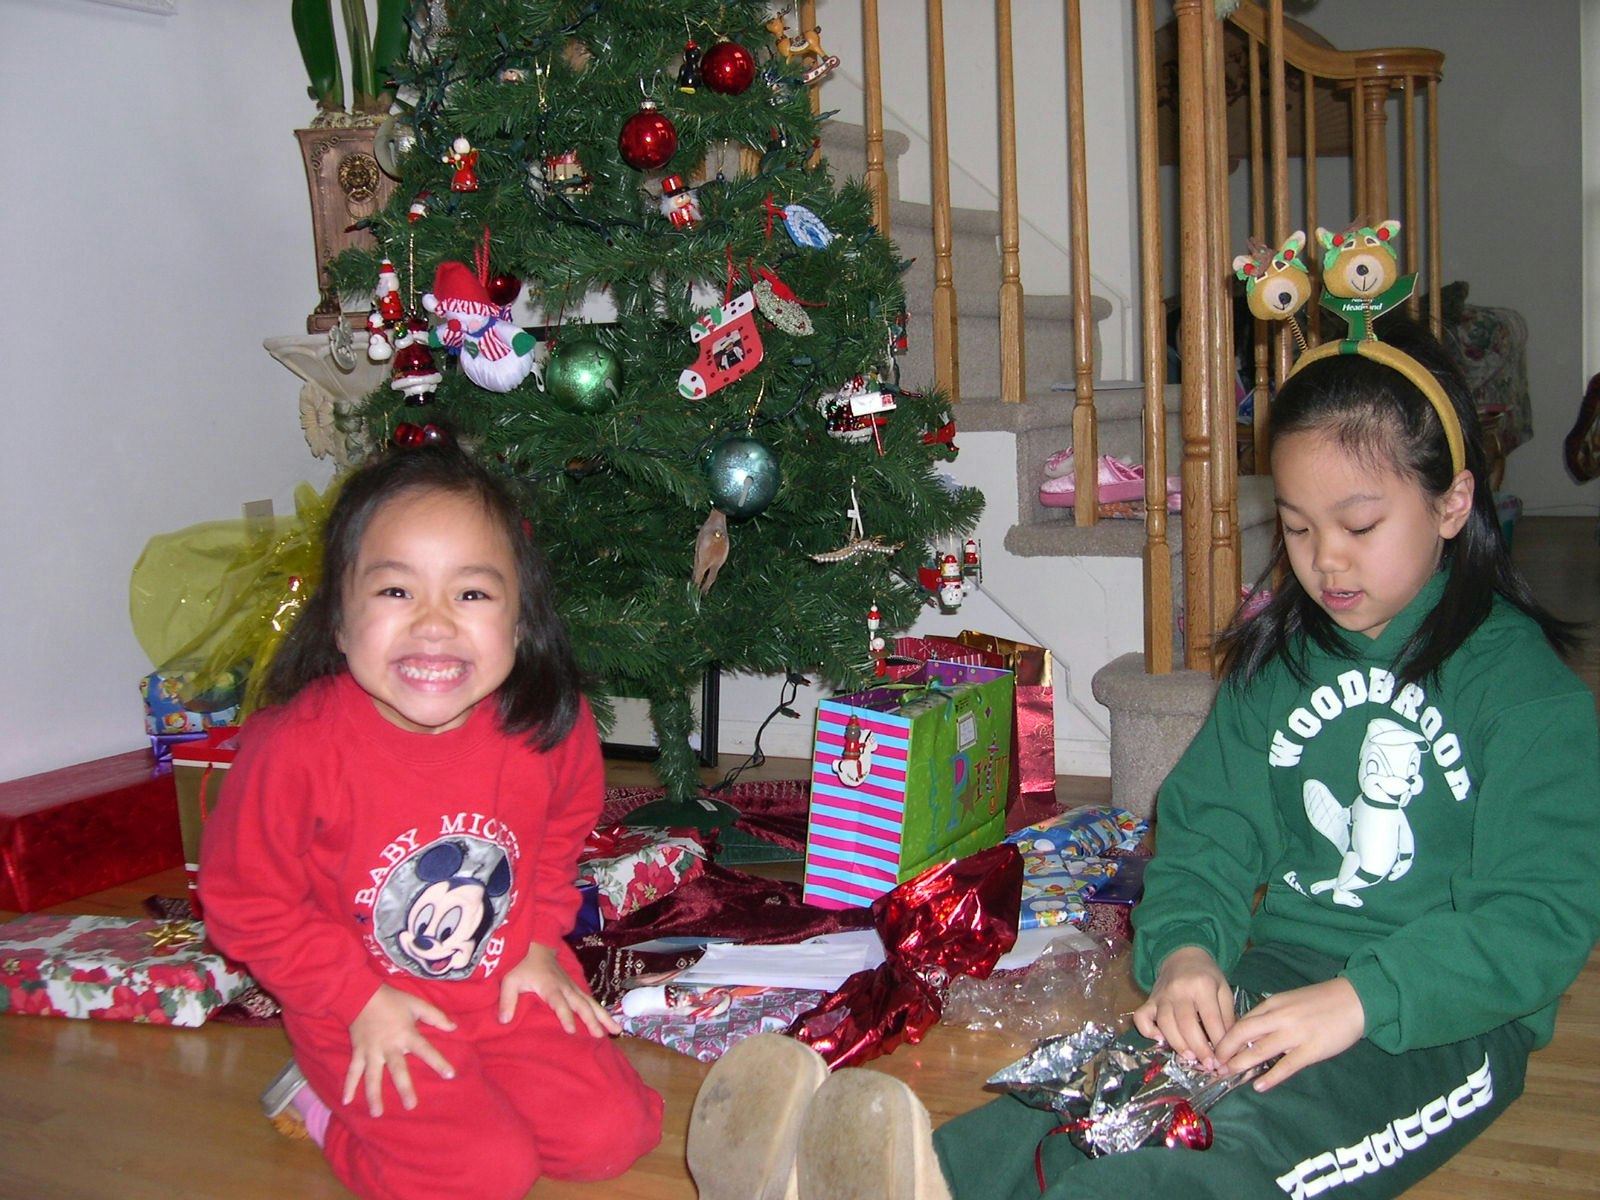 Vanessa Hu and sister sitting around Christmas tree opening gifts